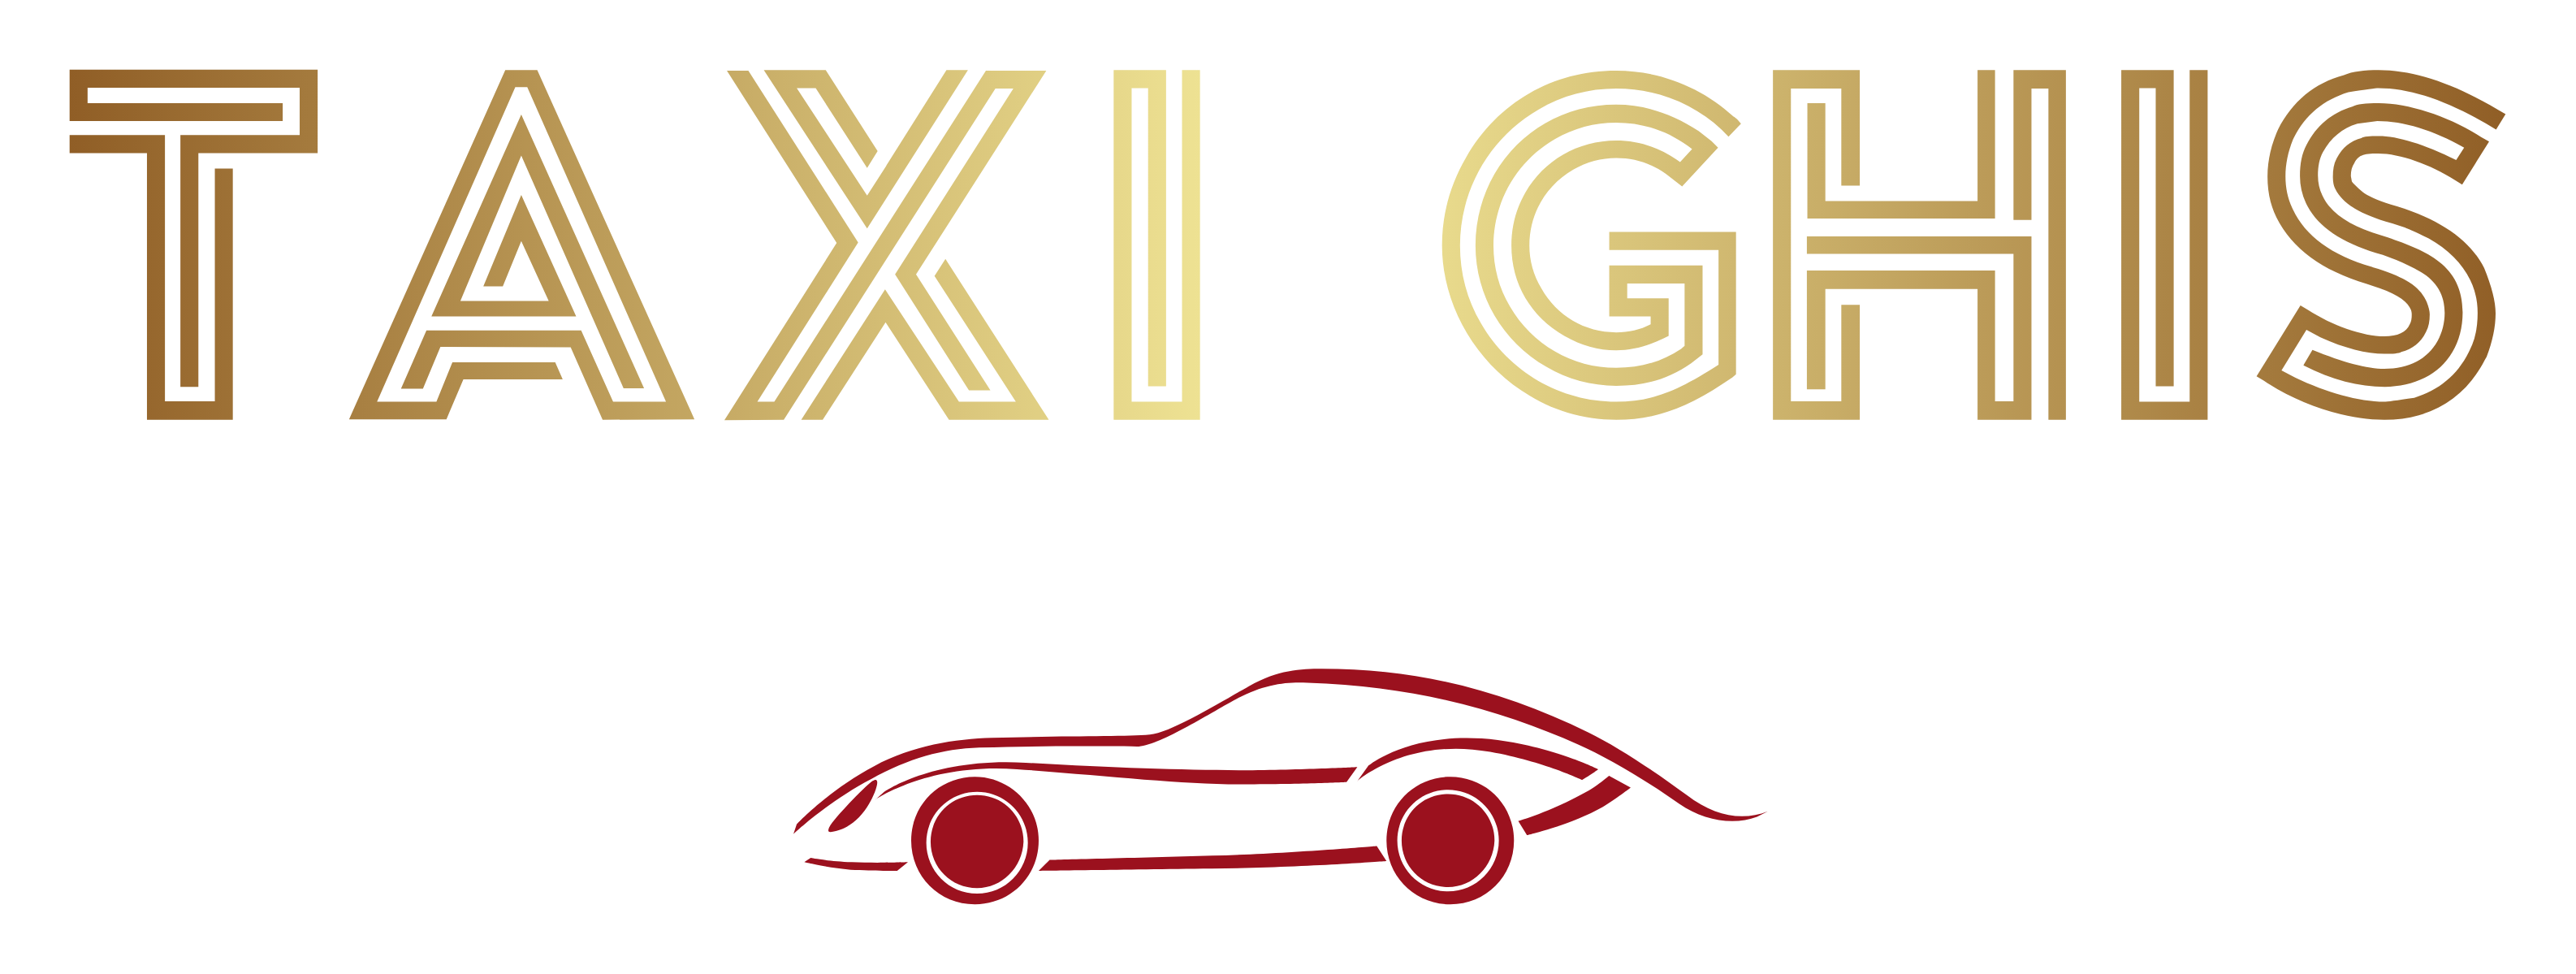 Logo taxi ghis